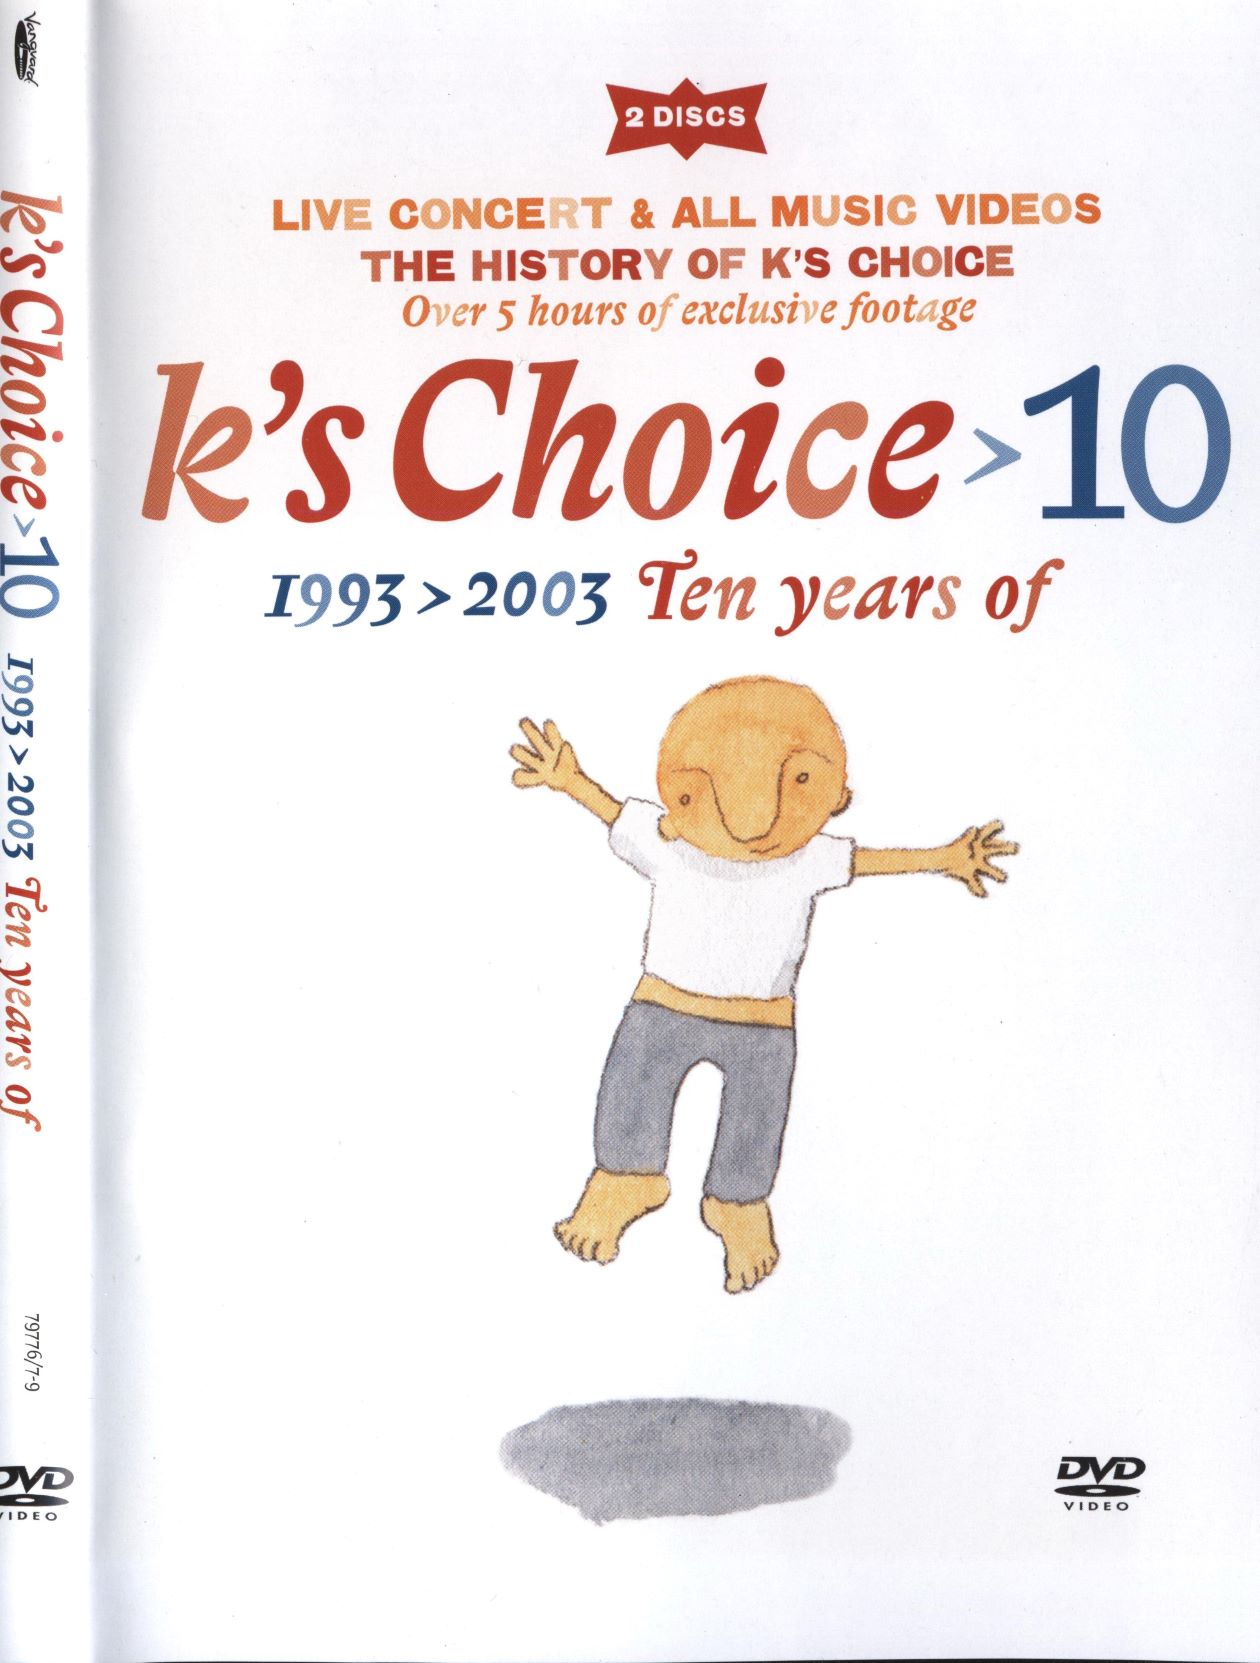 K's Choice - 10 (1993 - 2003, Ten Years Of) (2xDVD9)